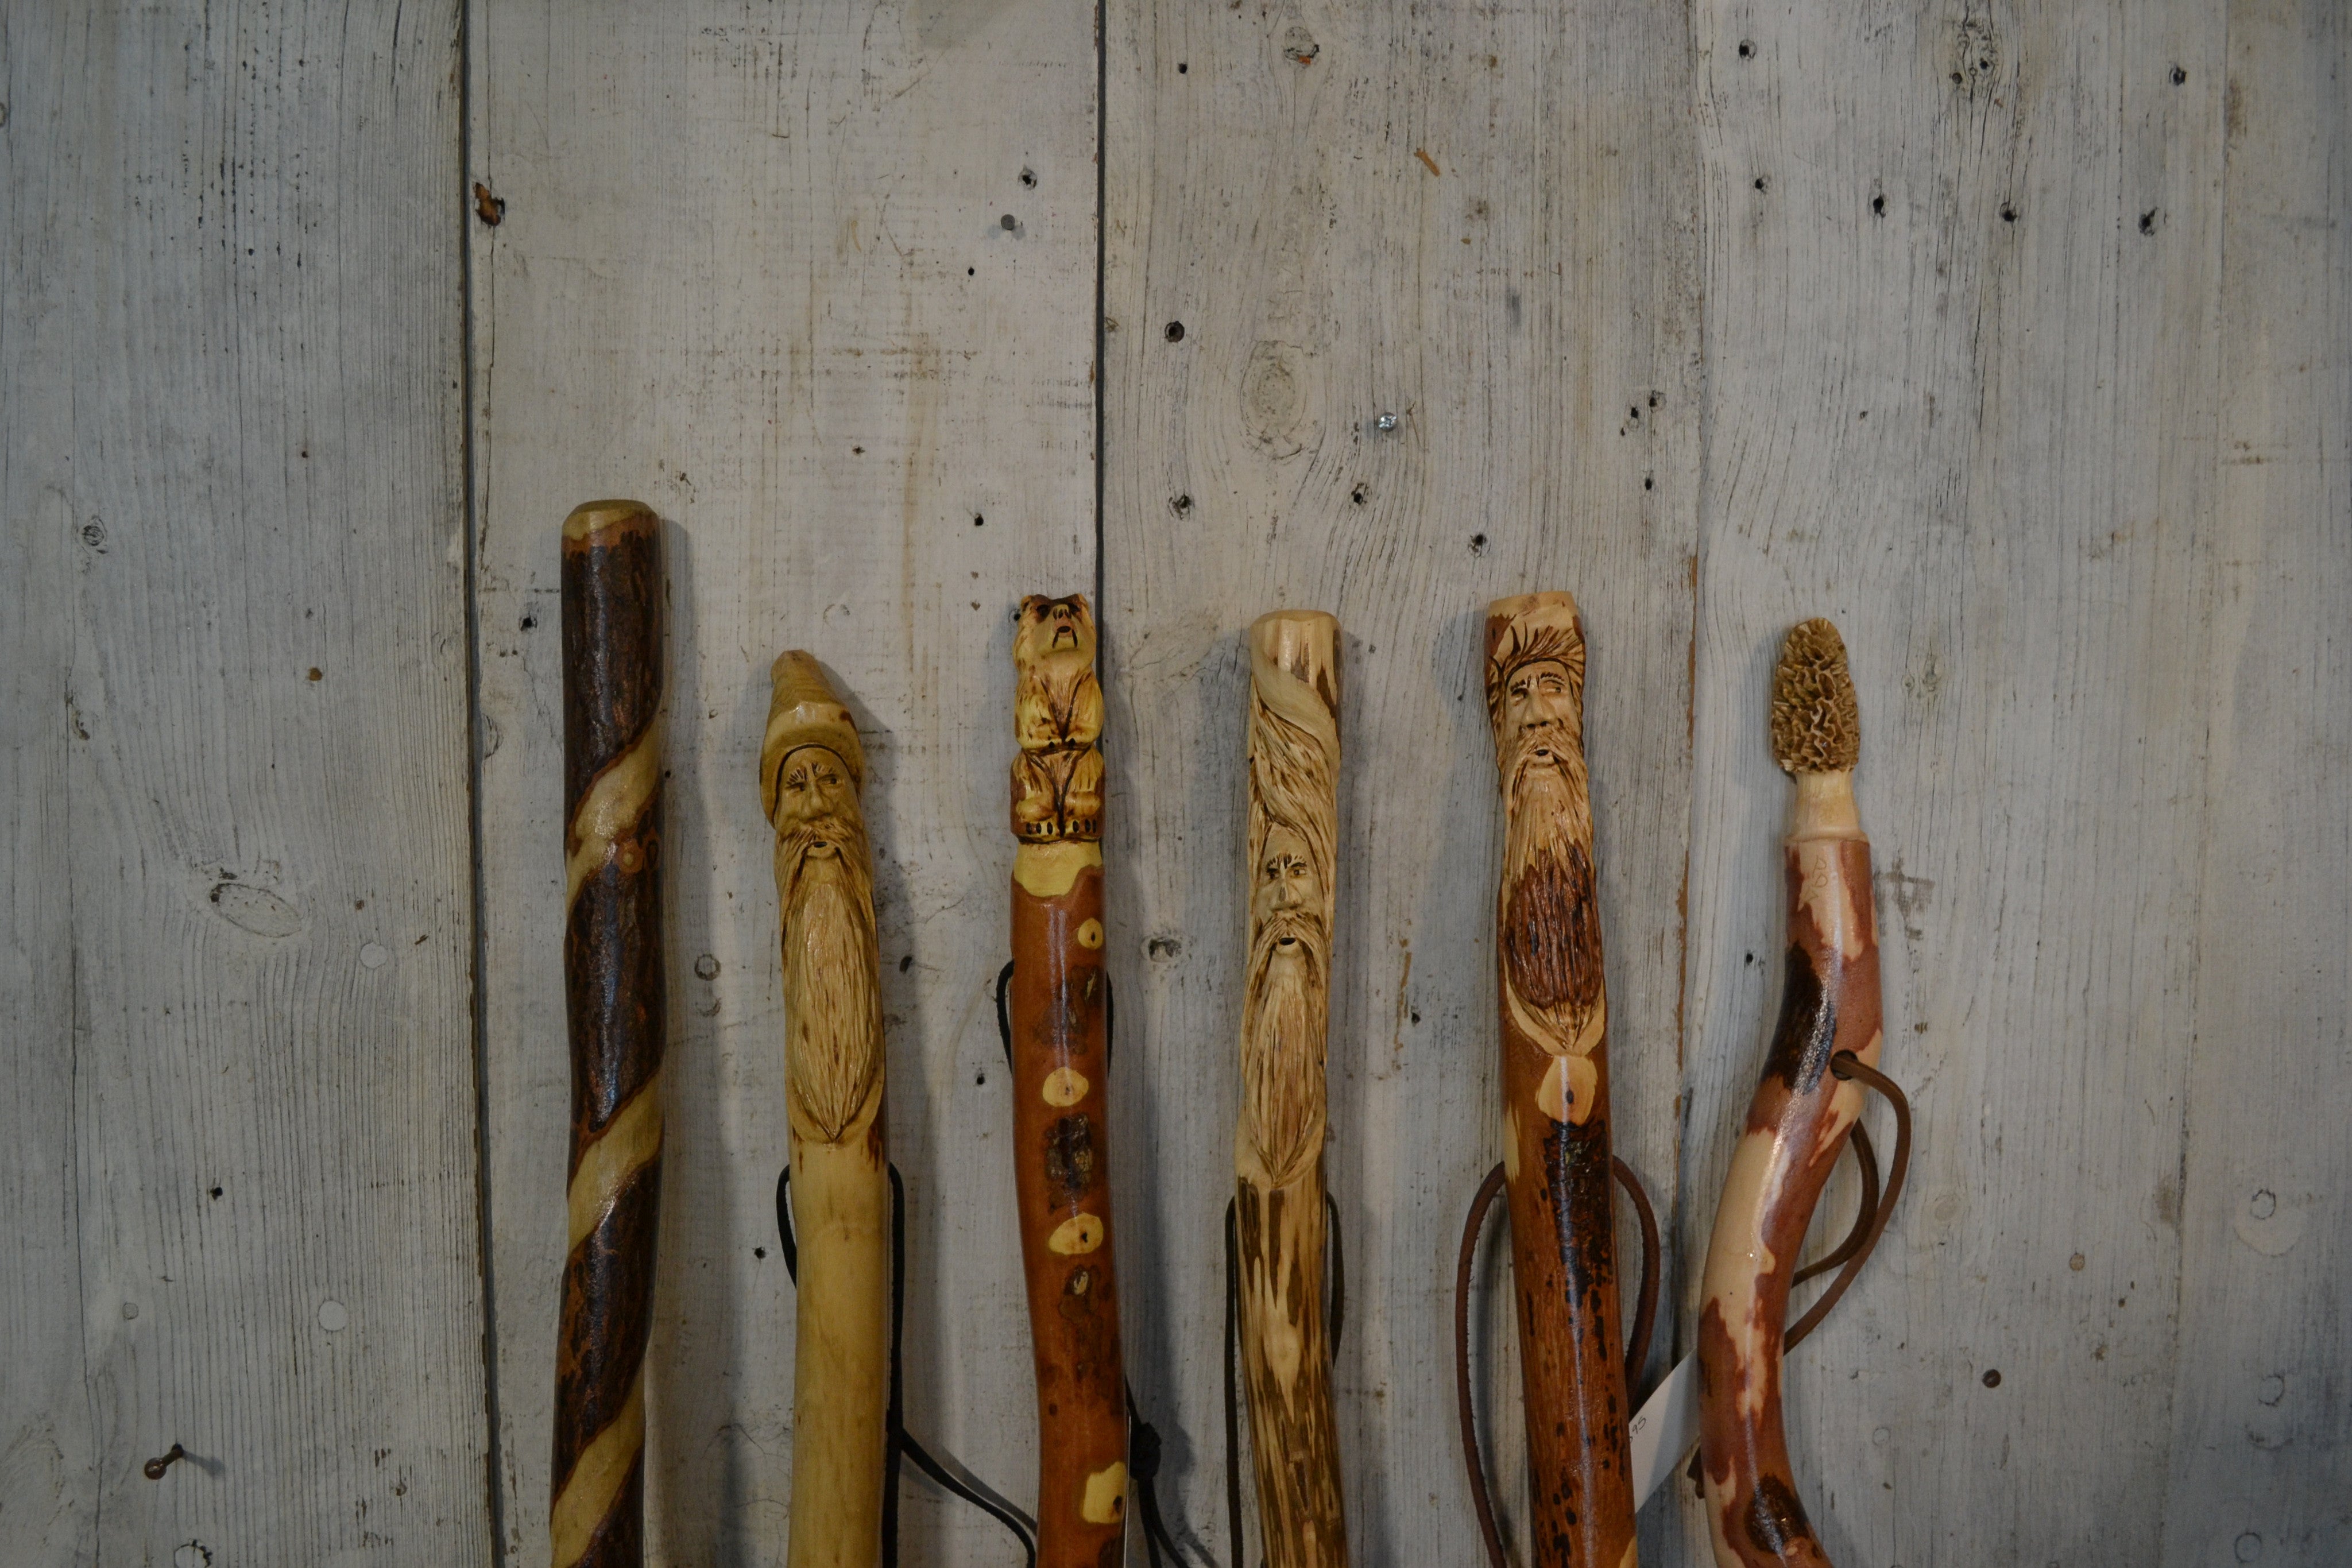 Awakening Bear Cane wood crafted hand carved Walking Stick